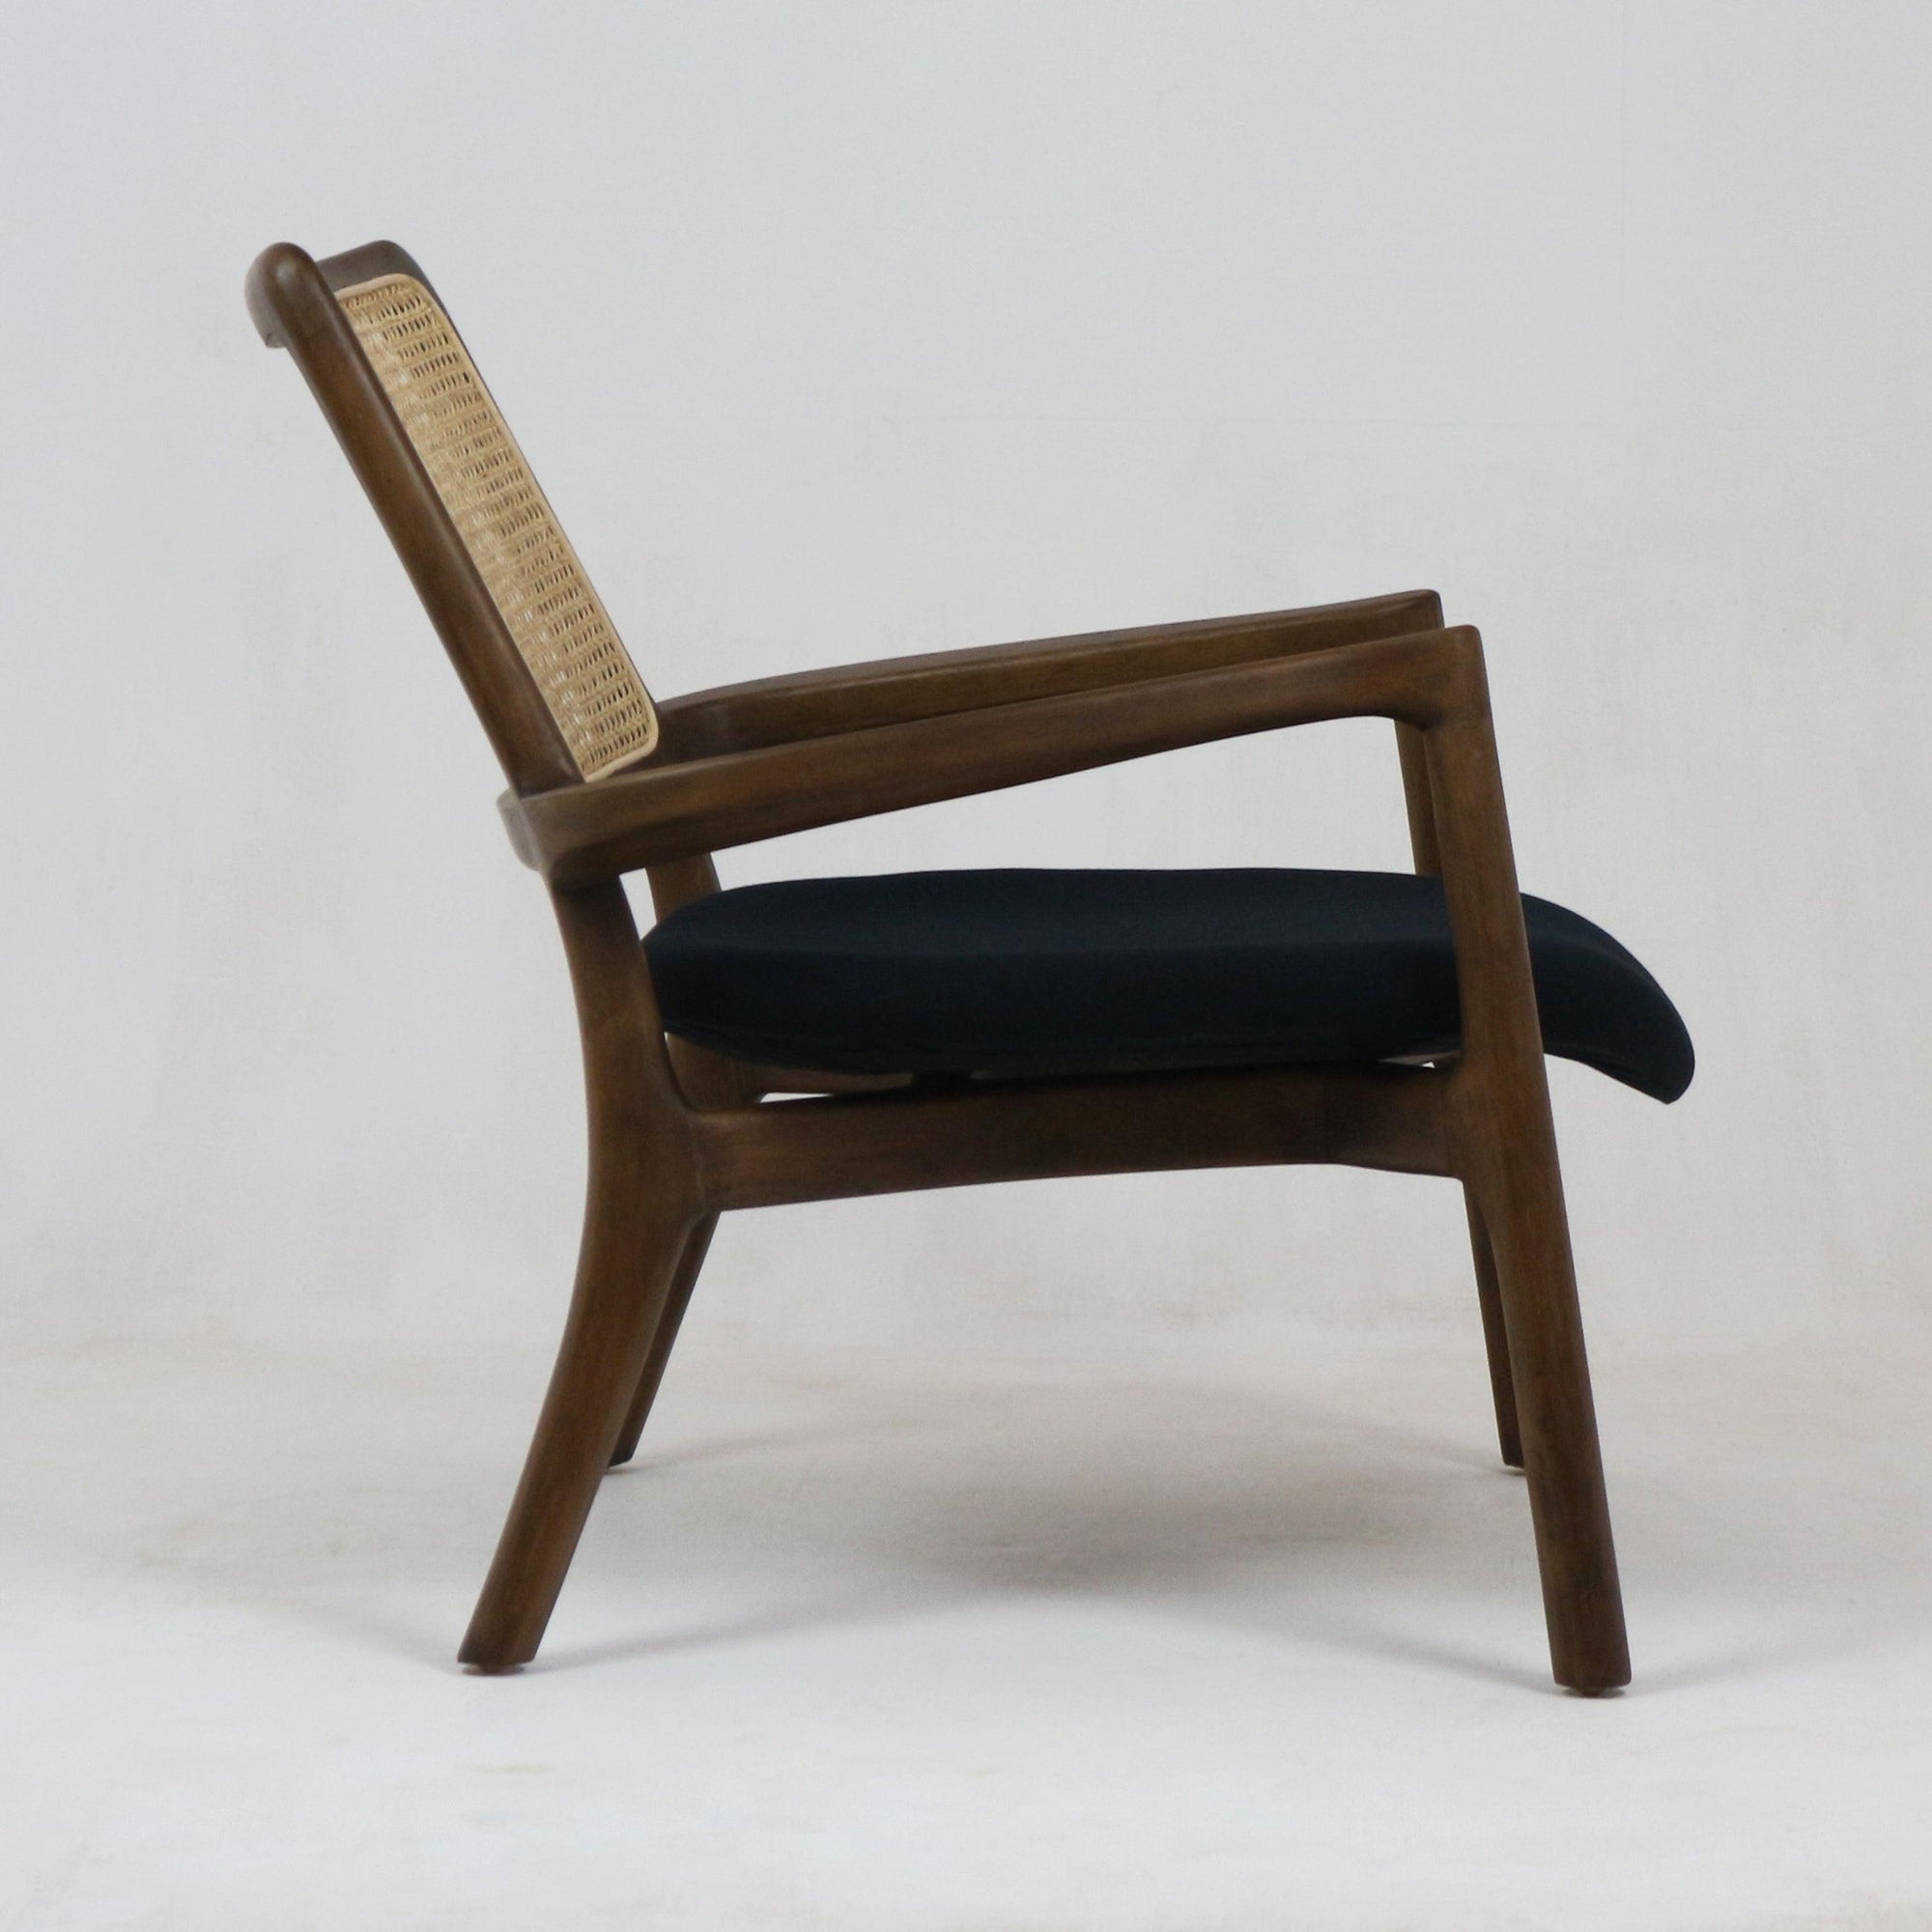 Tulip lounge chair in Teak - INTERIORTONIC